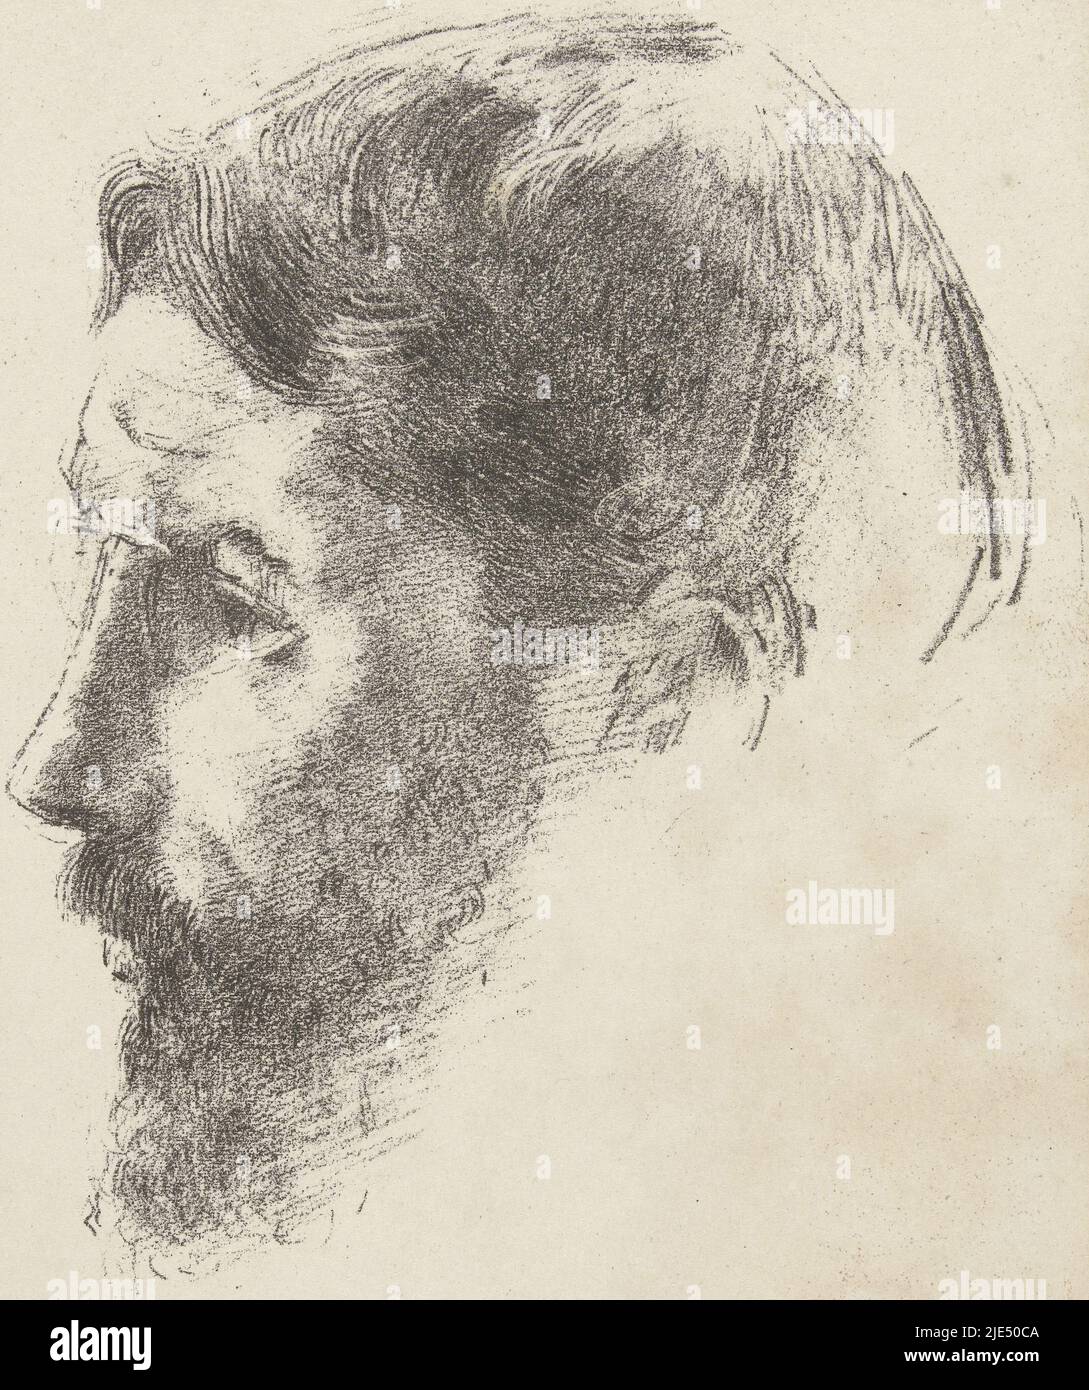 Portrait of the French painter Pierre Bonnard, Portrait of Pierre Bonnard, print maker: Odilon Redon, printer: Blanchard, print maker: France, printer: Paris, 1902 Stock Photo